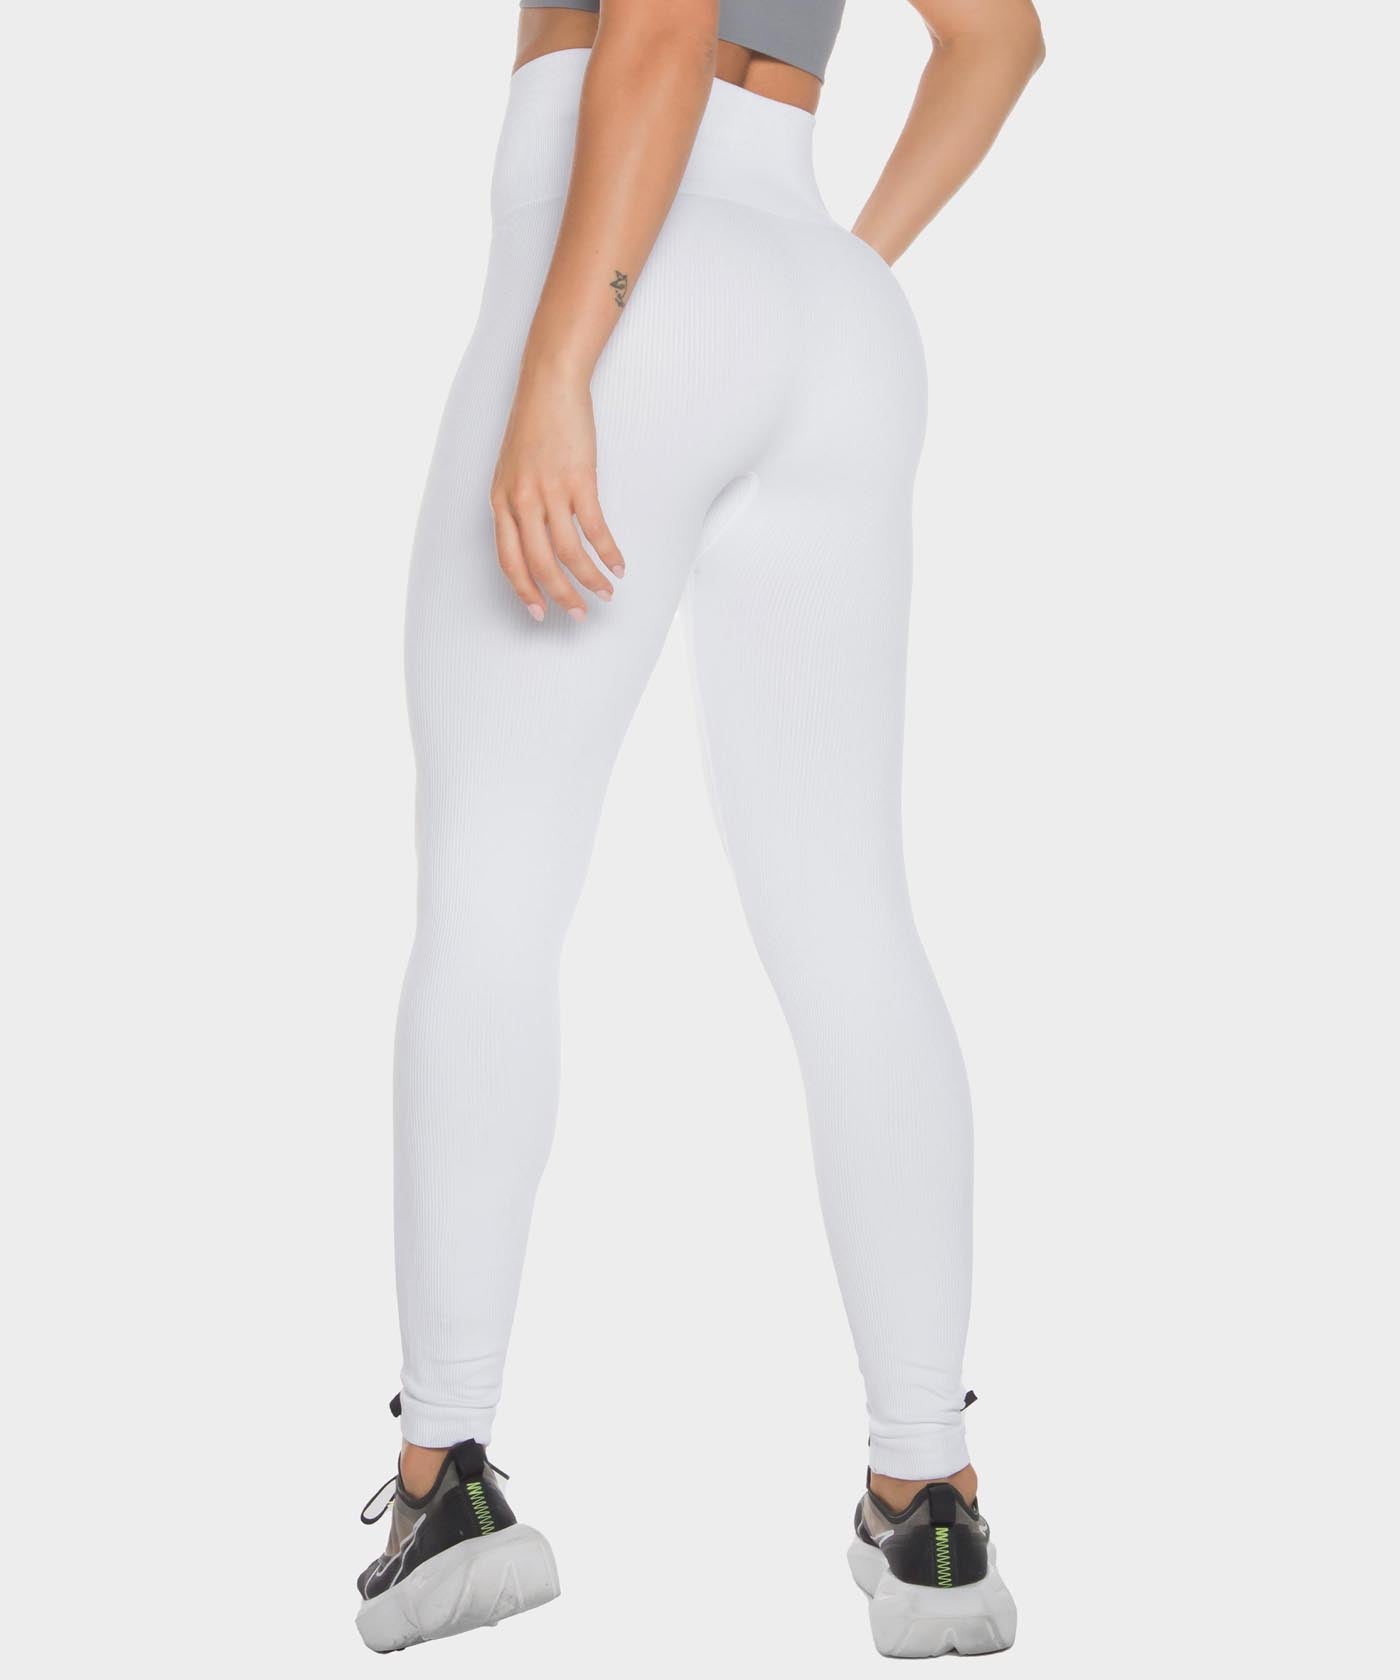 DZ, Graphic Wordmark Leggings - White, Workout Leggings Women